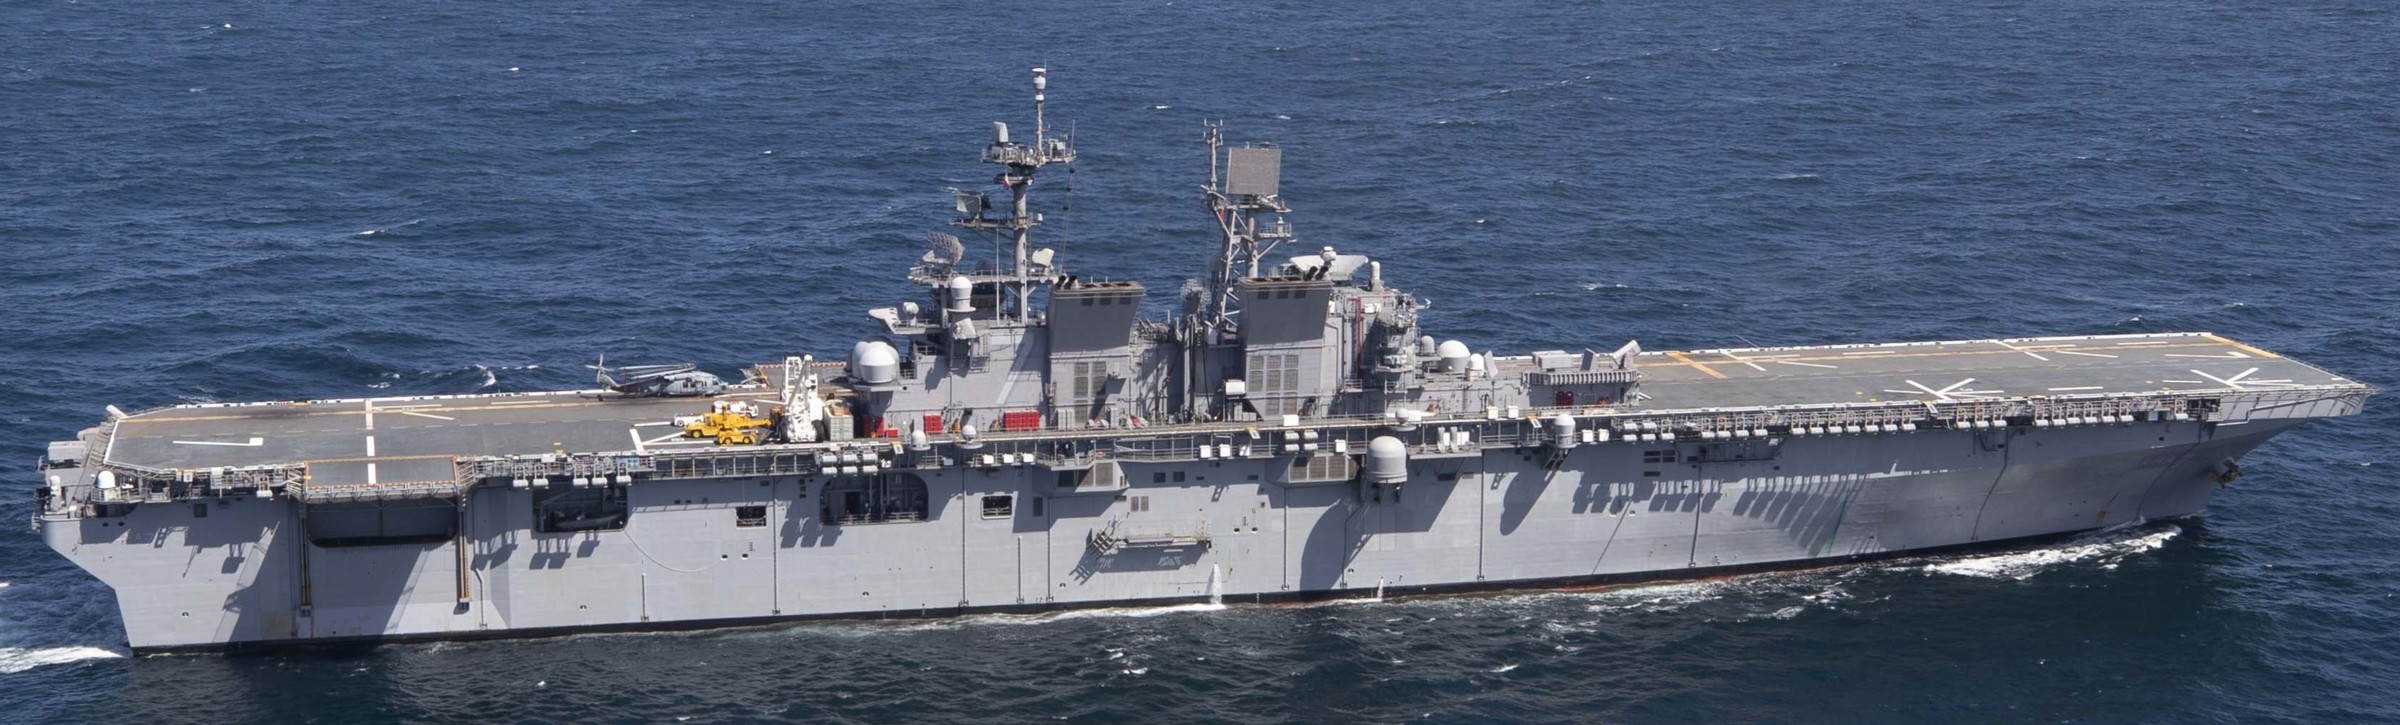 lha-7 uss tripoli america class amphibious assault ship landing us navy marines pacific ocean 53